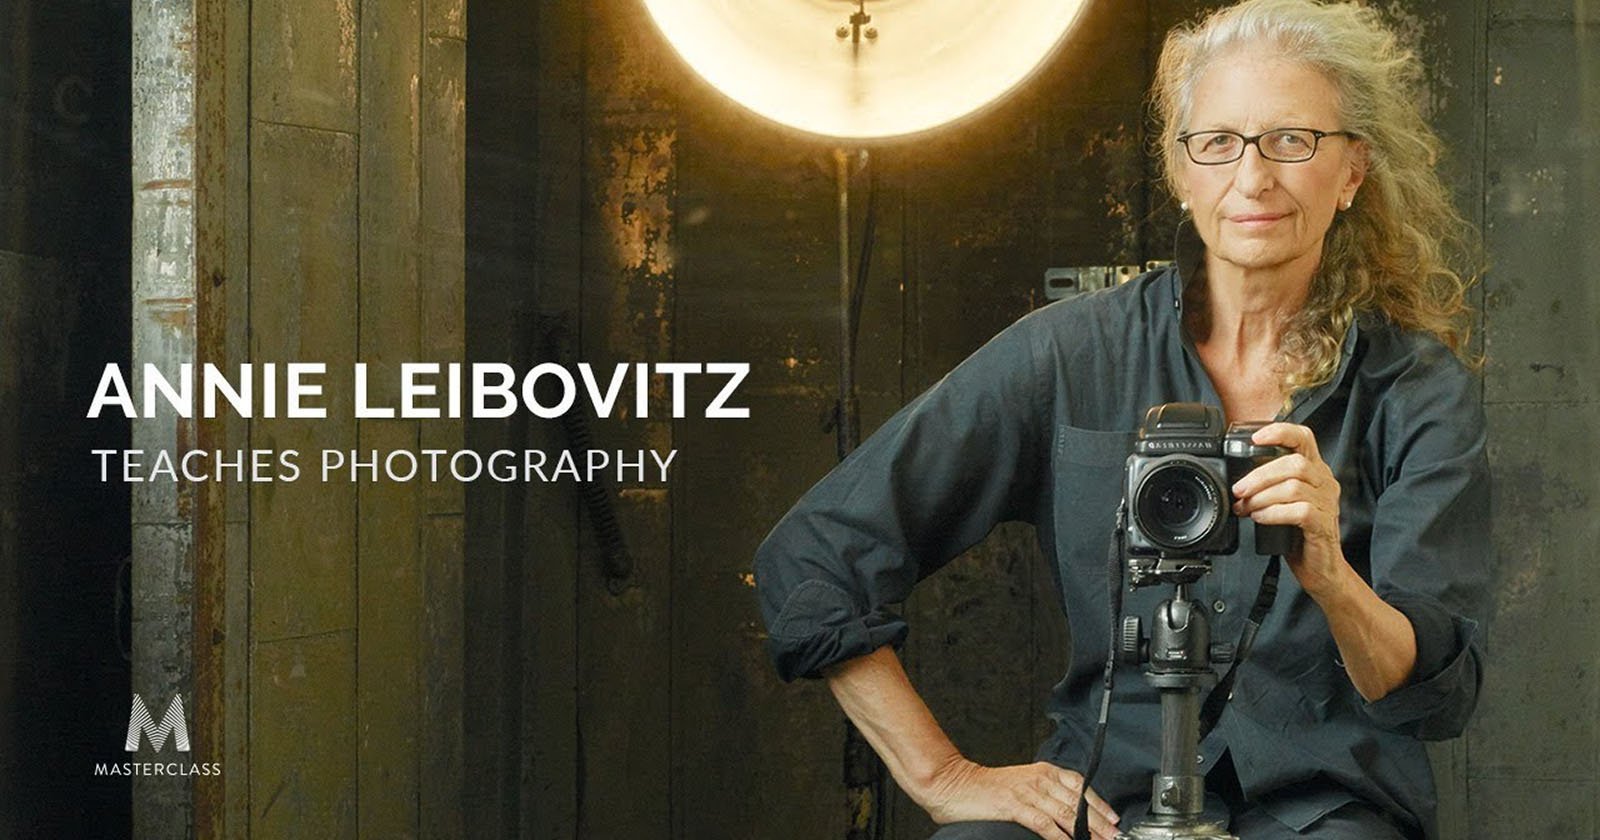 Annie Leibovitz cover image